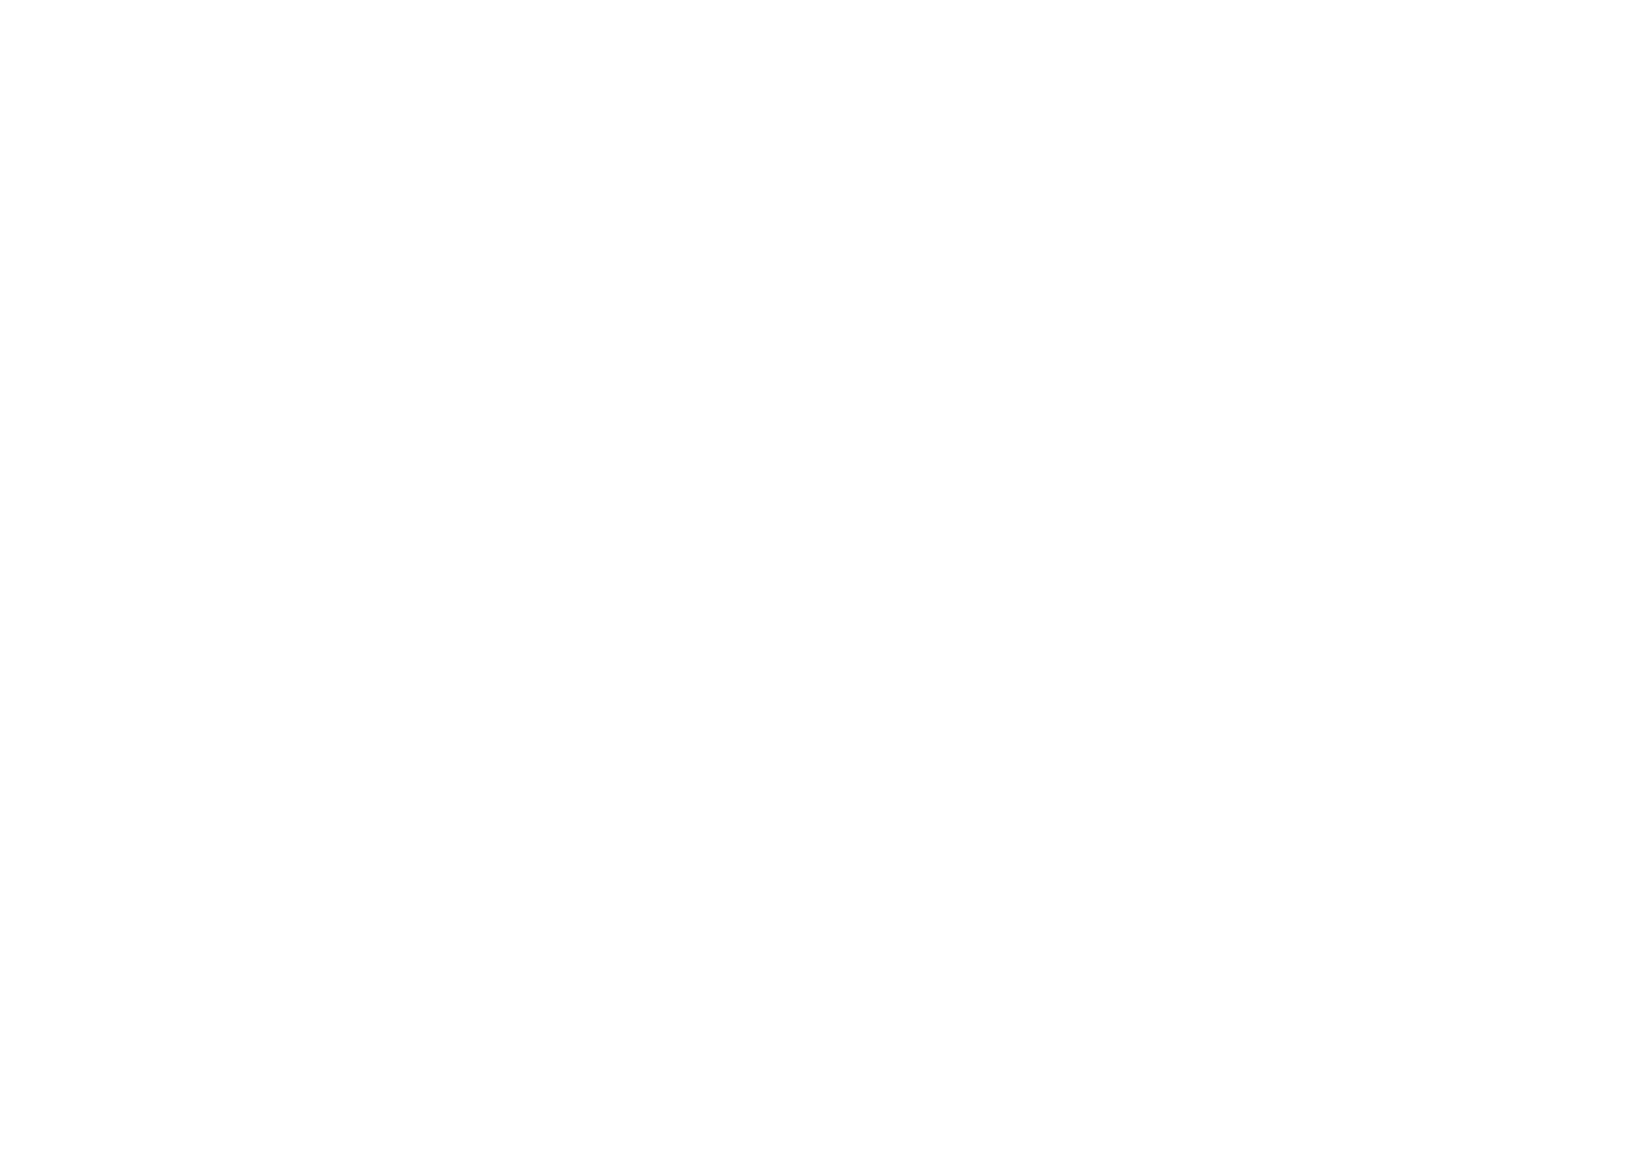 F&M Bank Logo